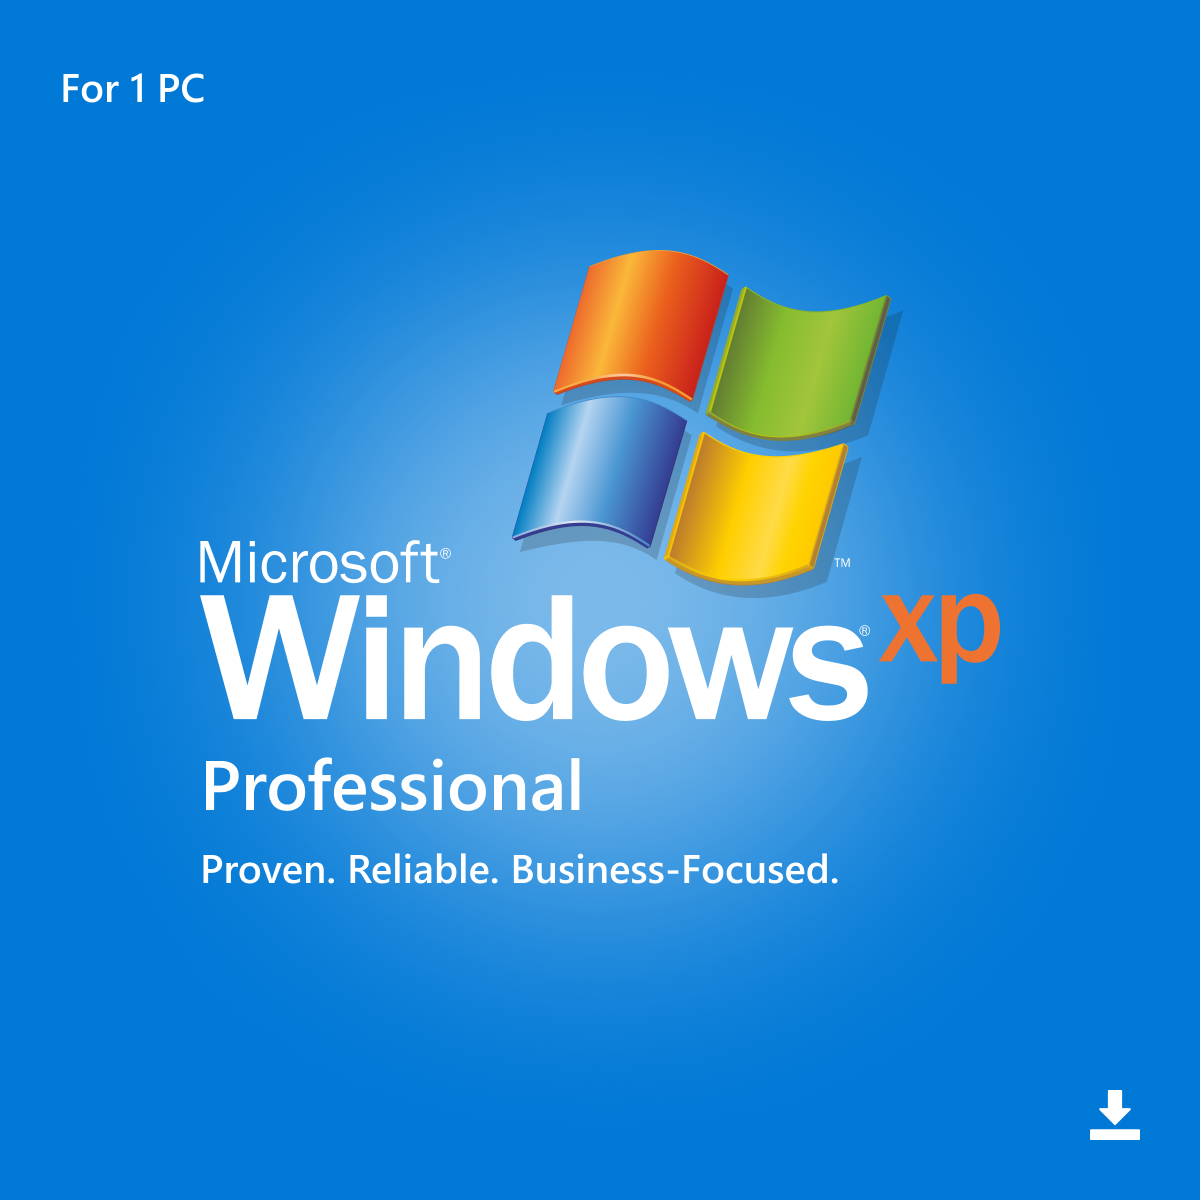 Microsoft Windows XP Professional